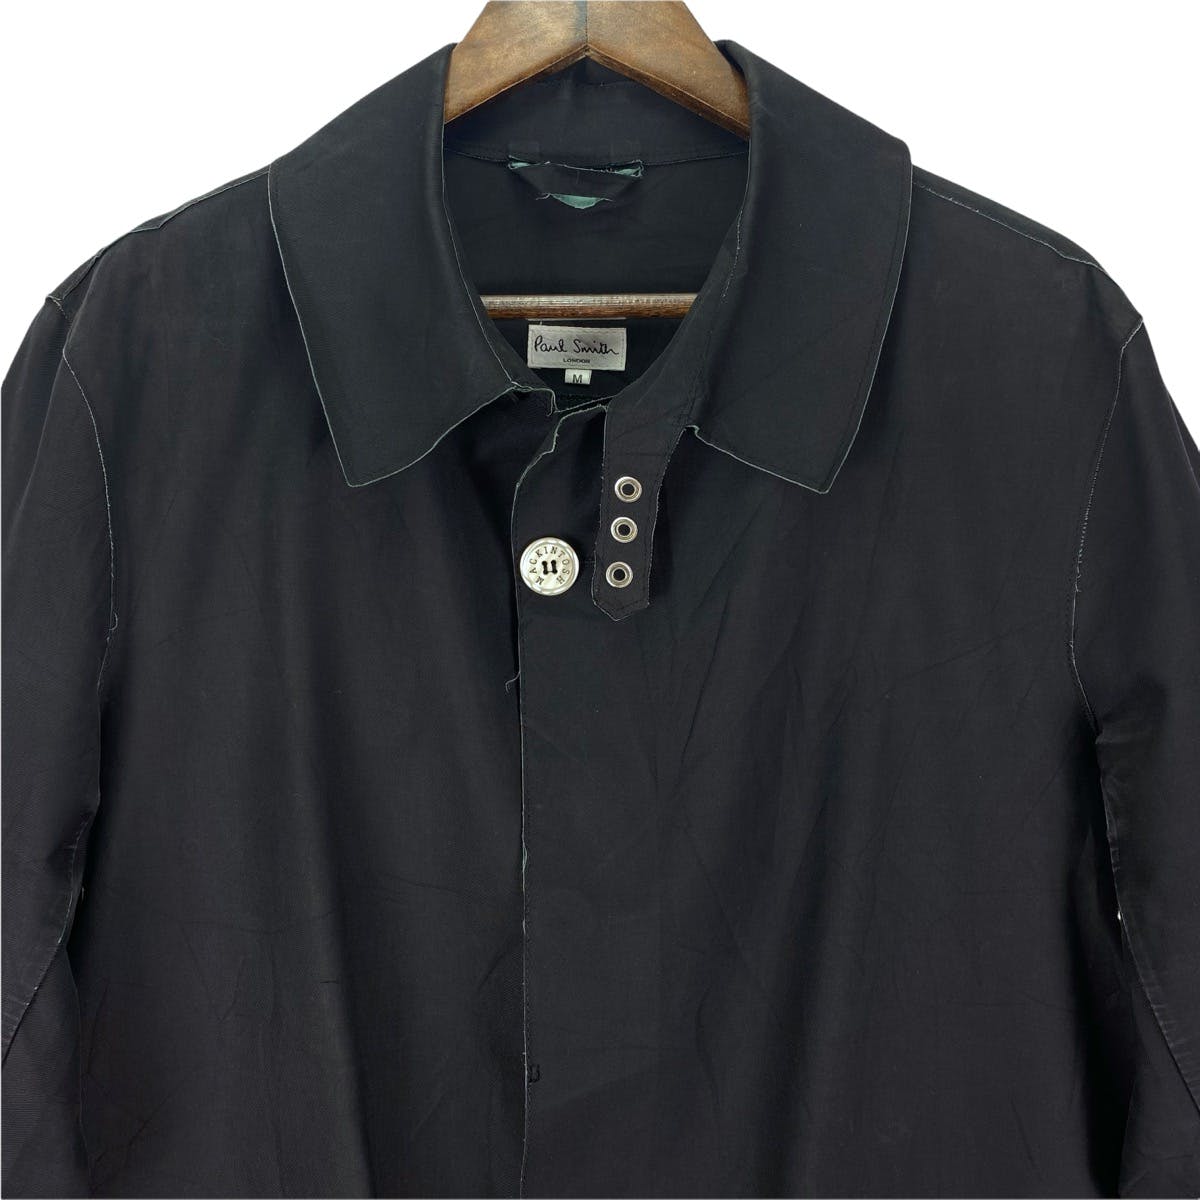 Mackintosh Paul Smith Trench Coat Jacket - 10